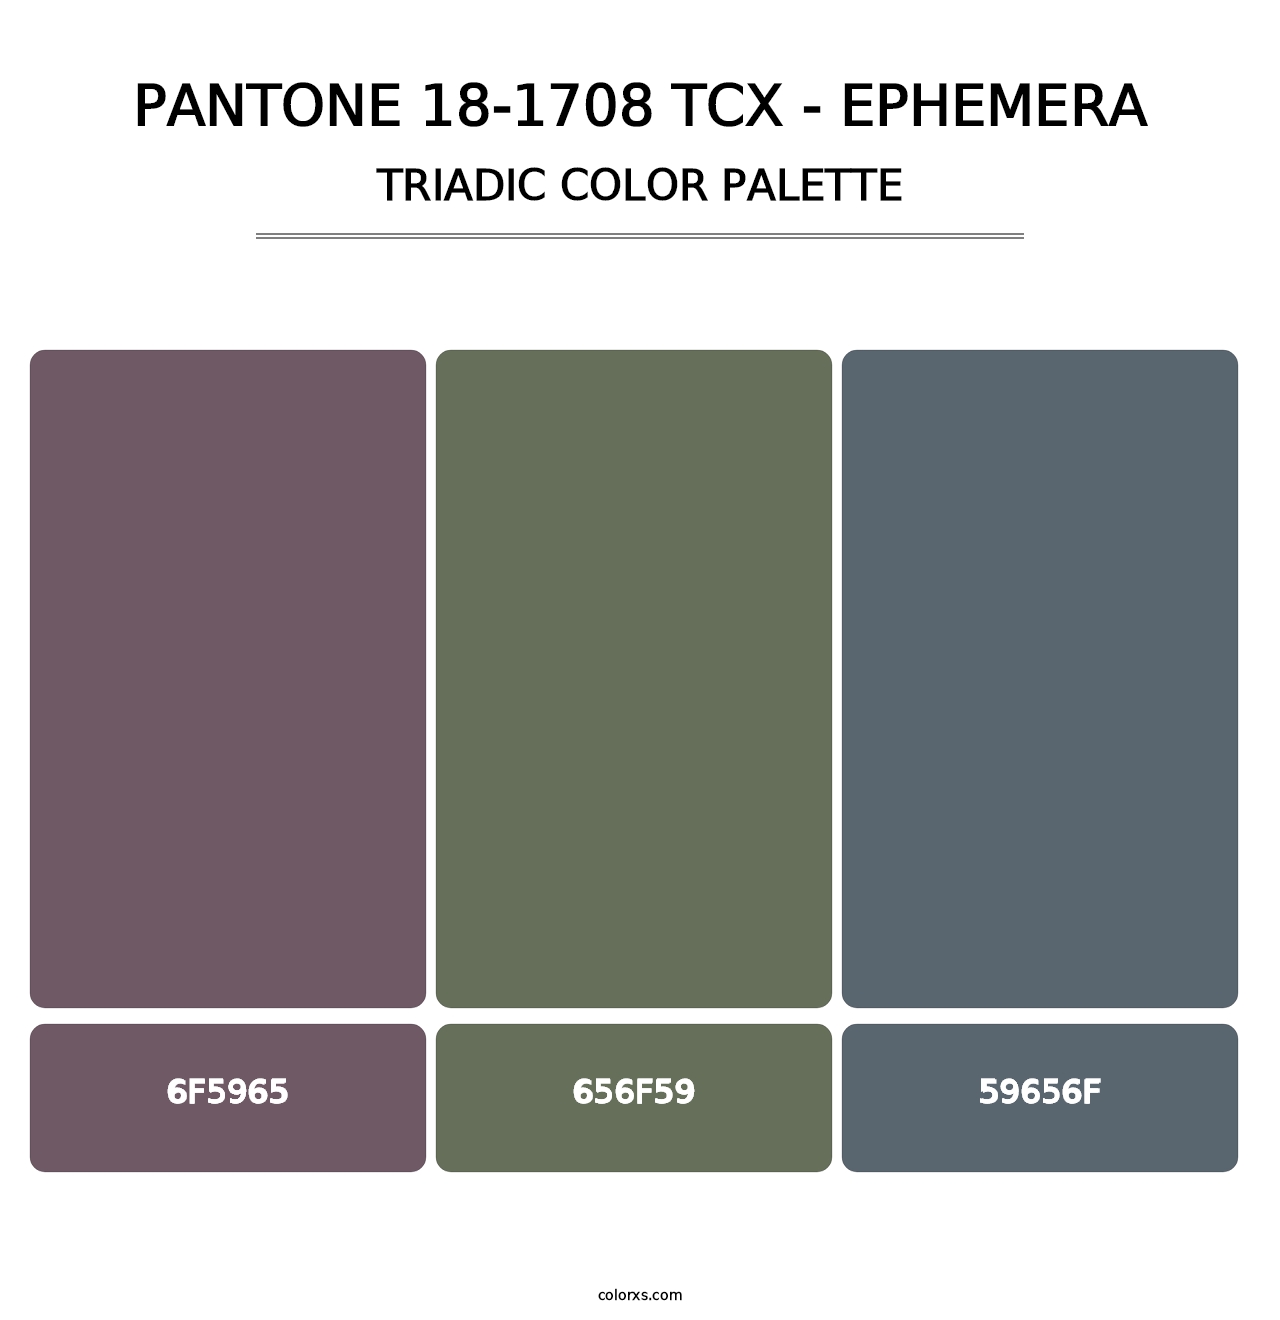 PANTONE 18-1708 TCX - Ephemera - Triadic Color Palette